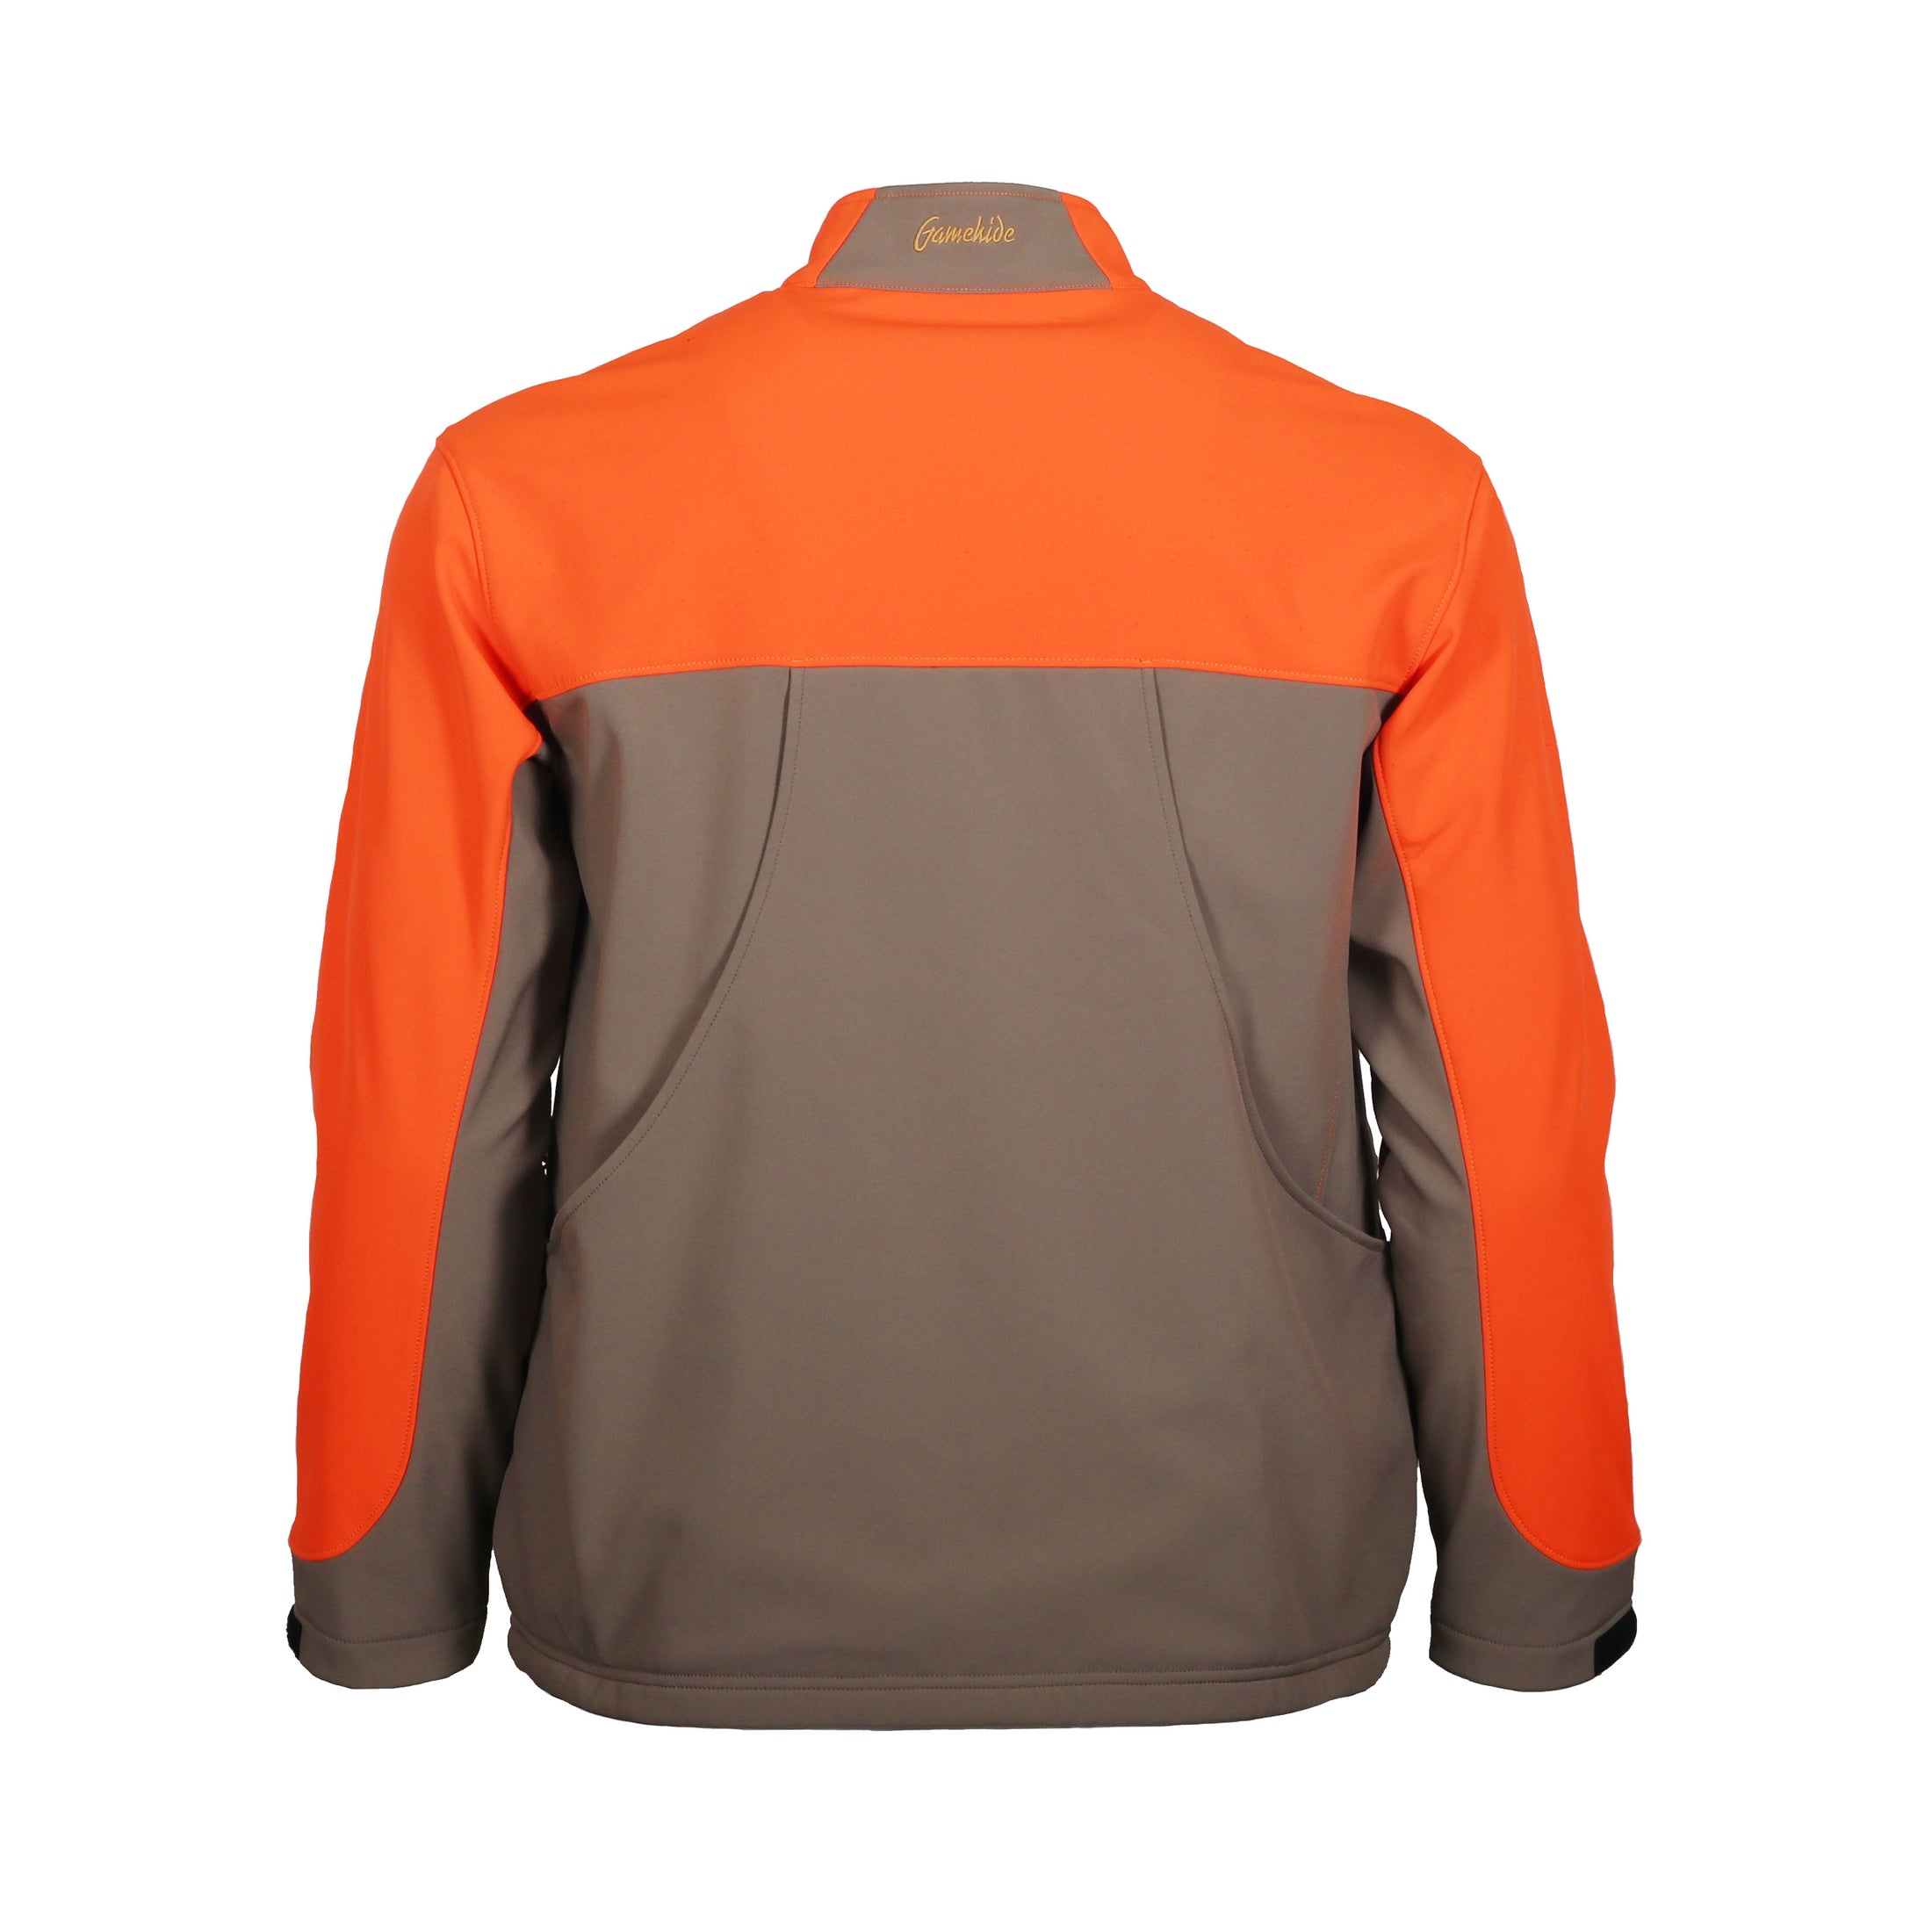 gamehdie Fenceline Upland Hunting Jacket back (tan/blaze orange)